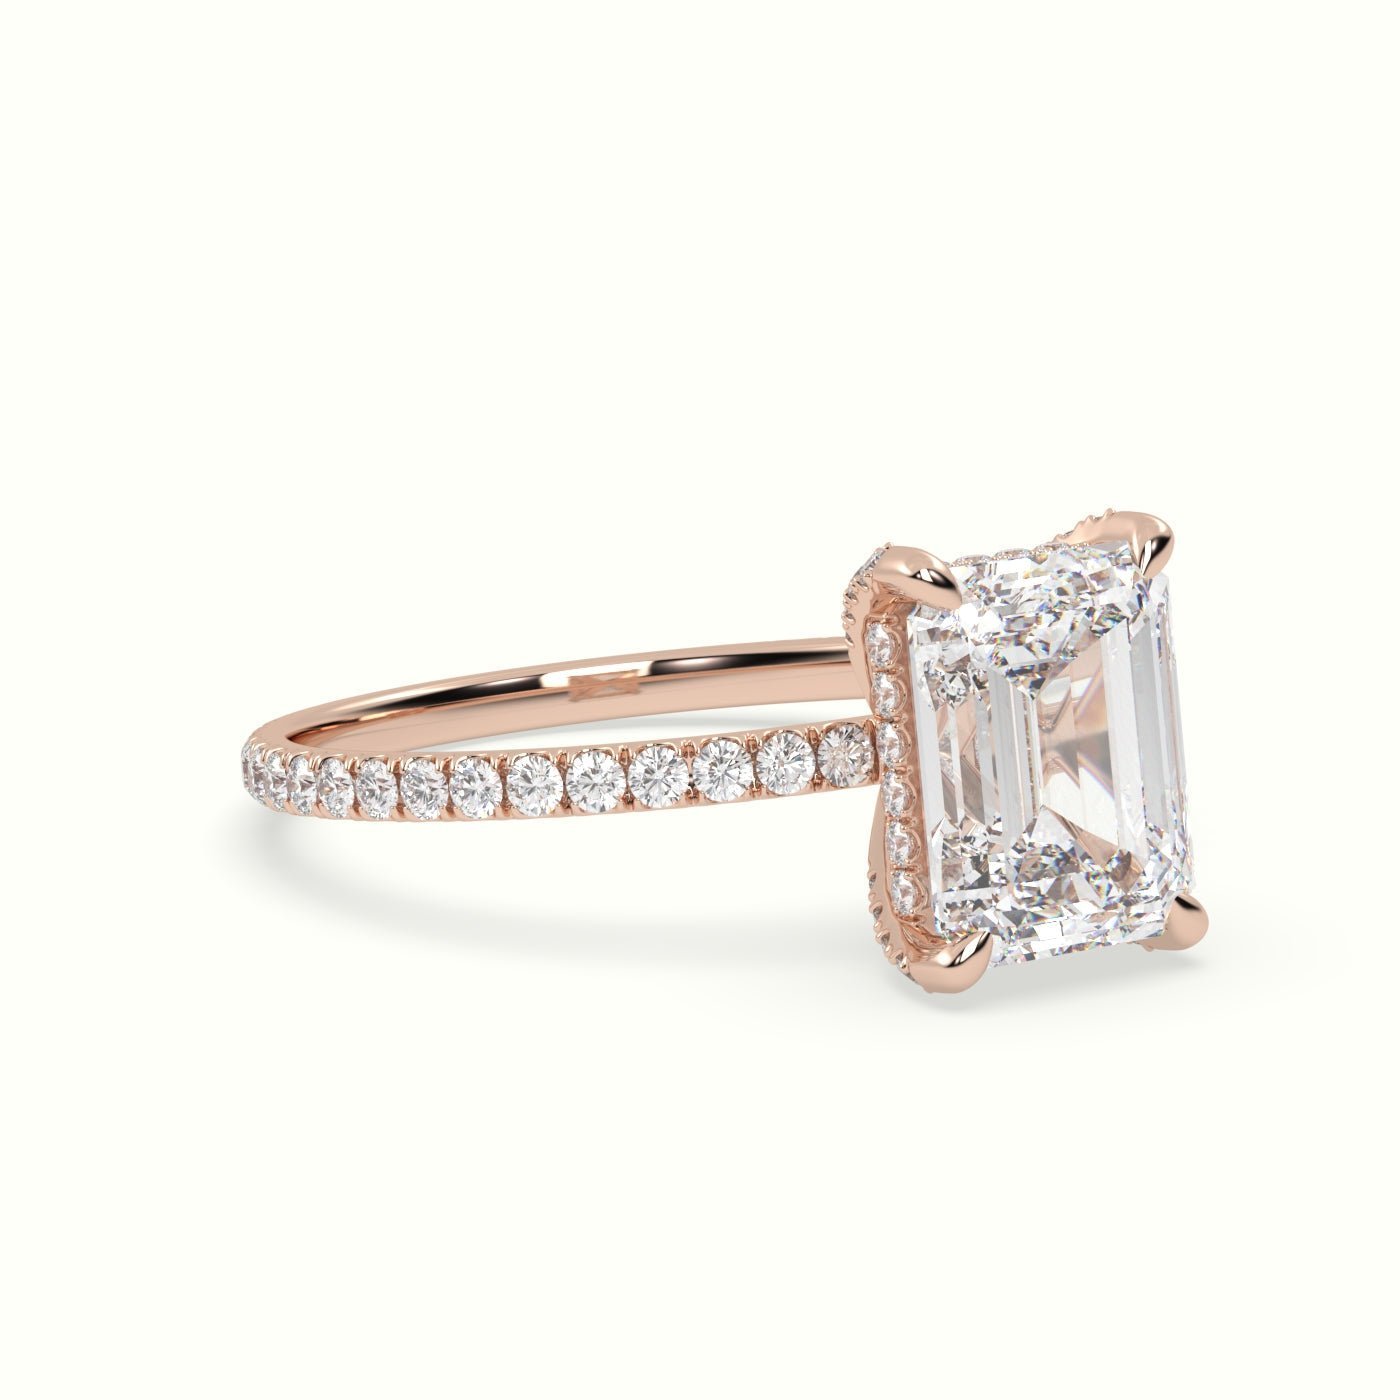 18k Gold Emerald Cut Pave Set Engagement Ring - shemesh_diamonds